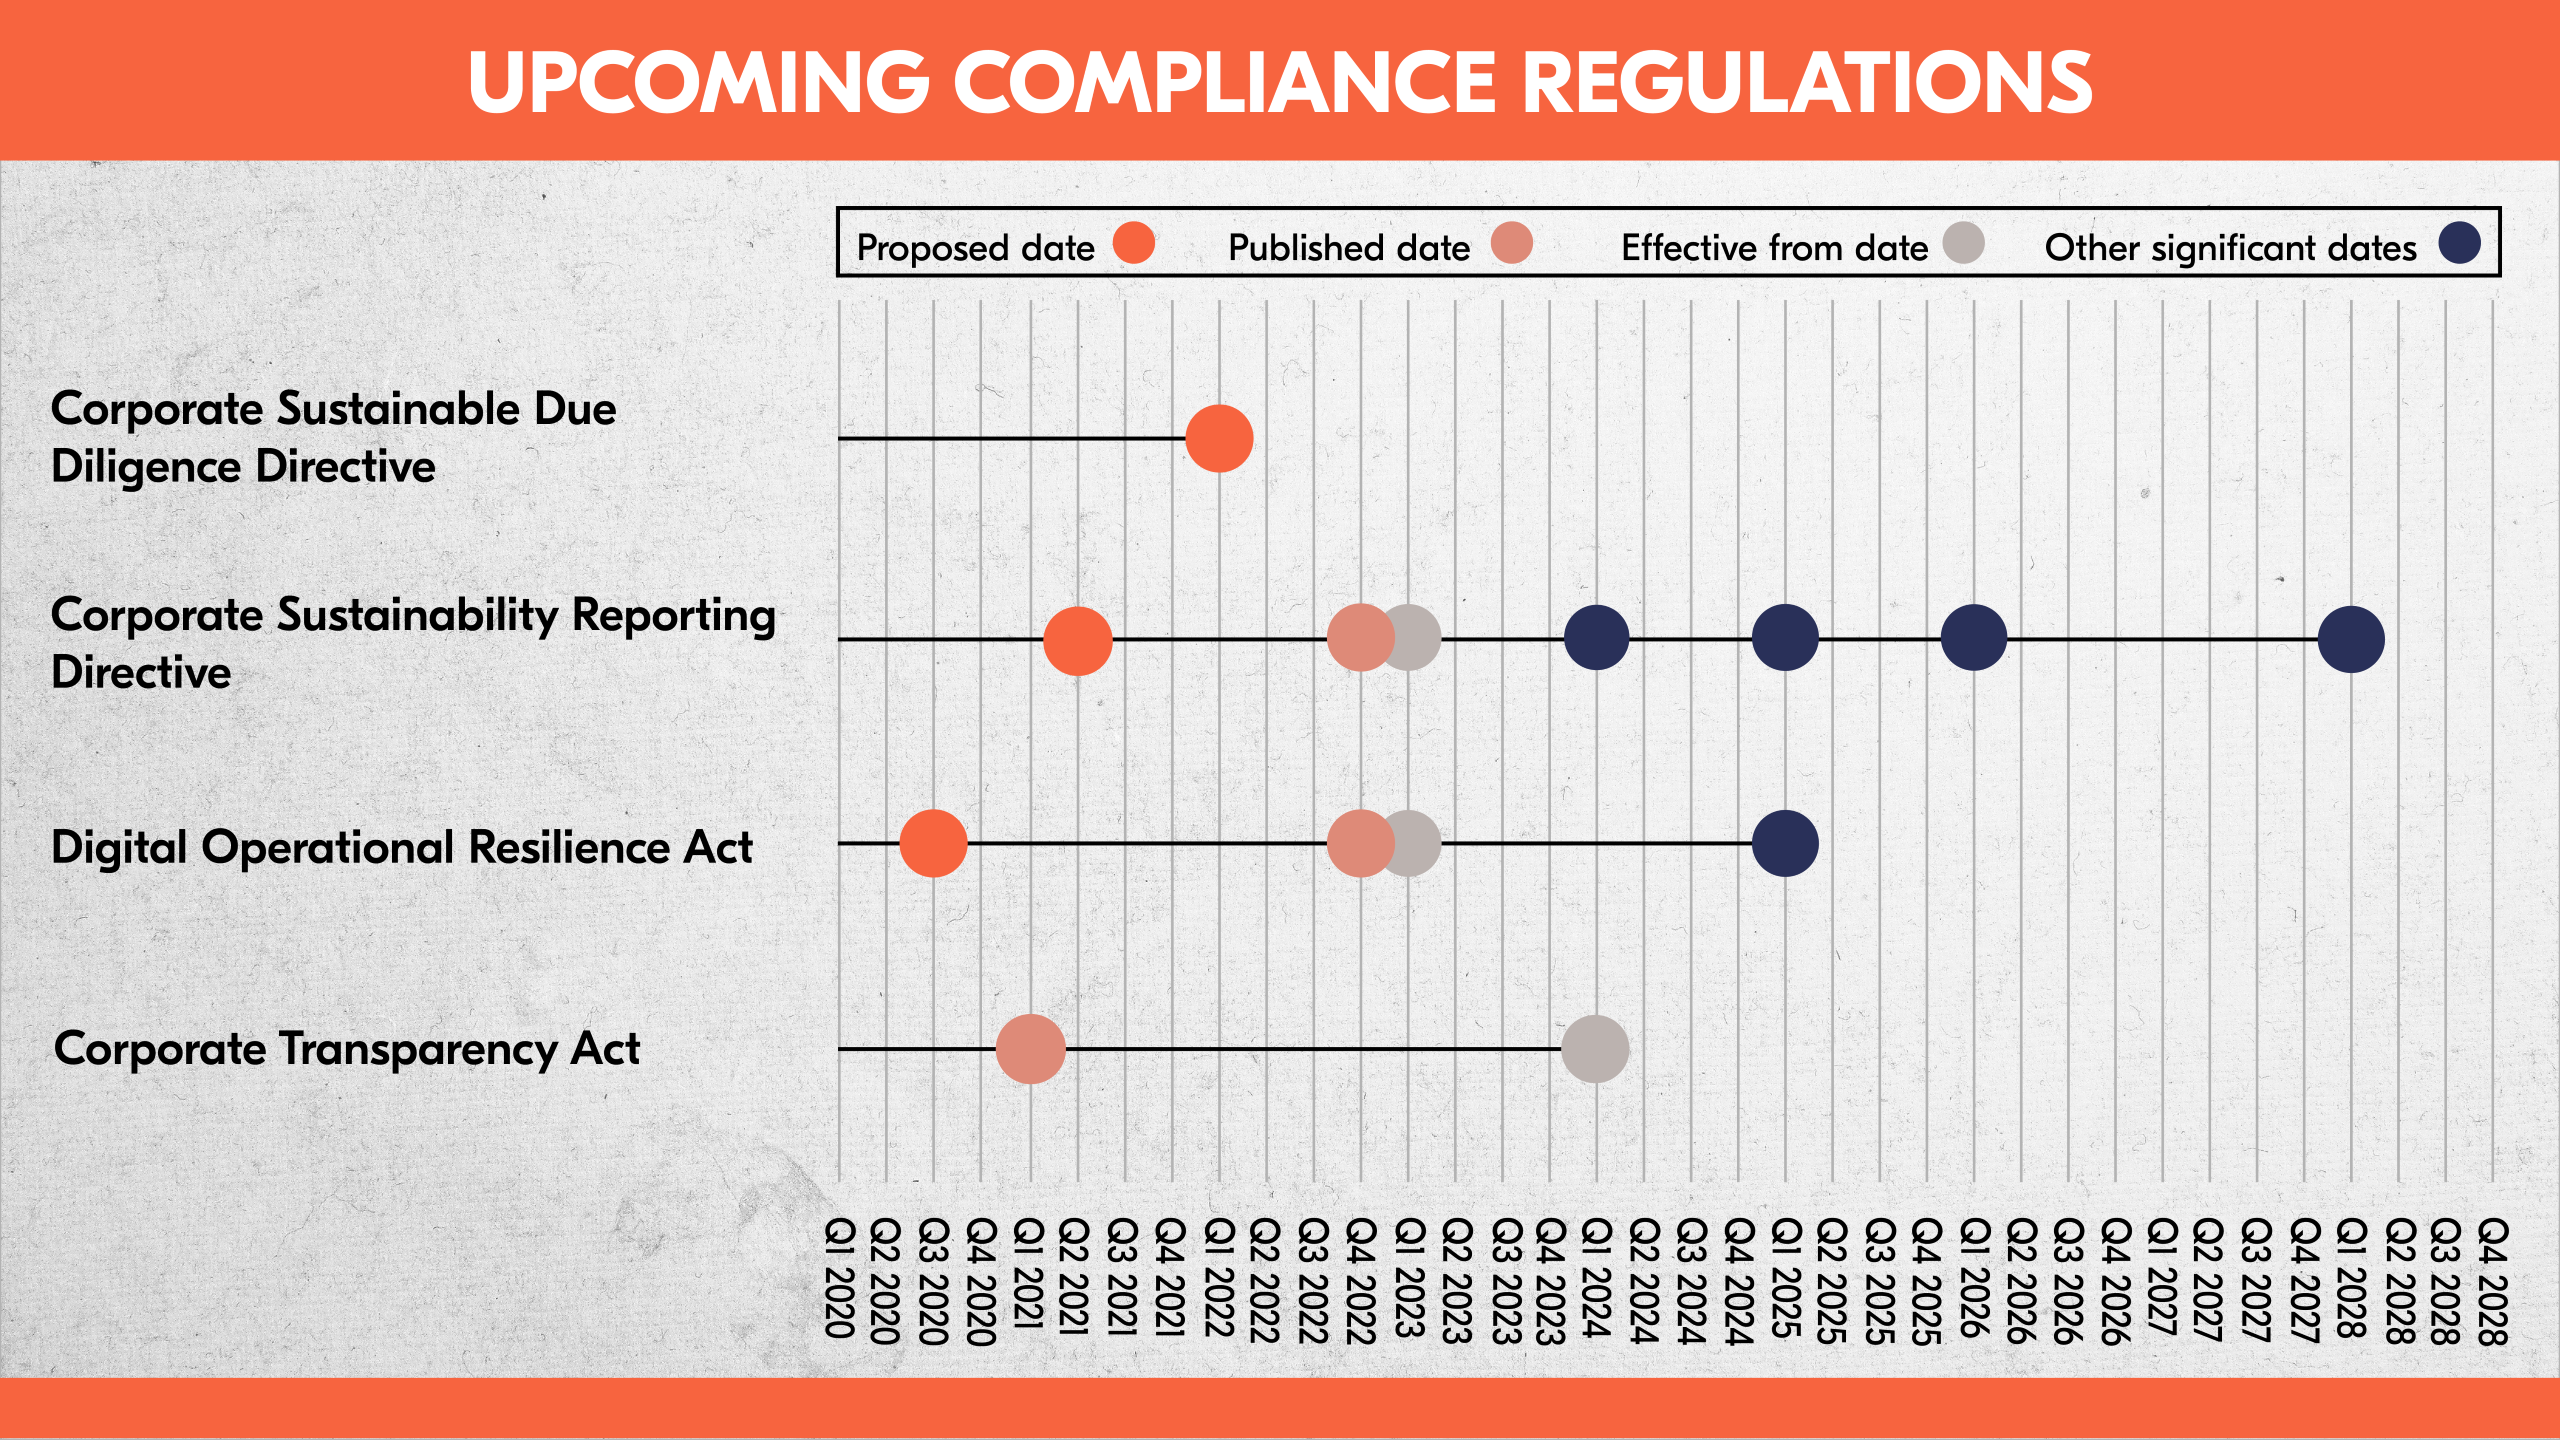 Upcoming Compliance Regulations Timeline